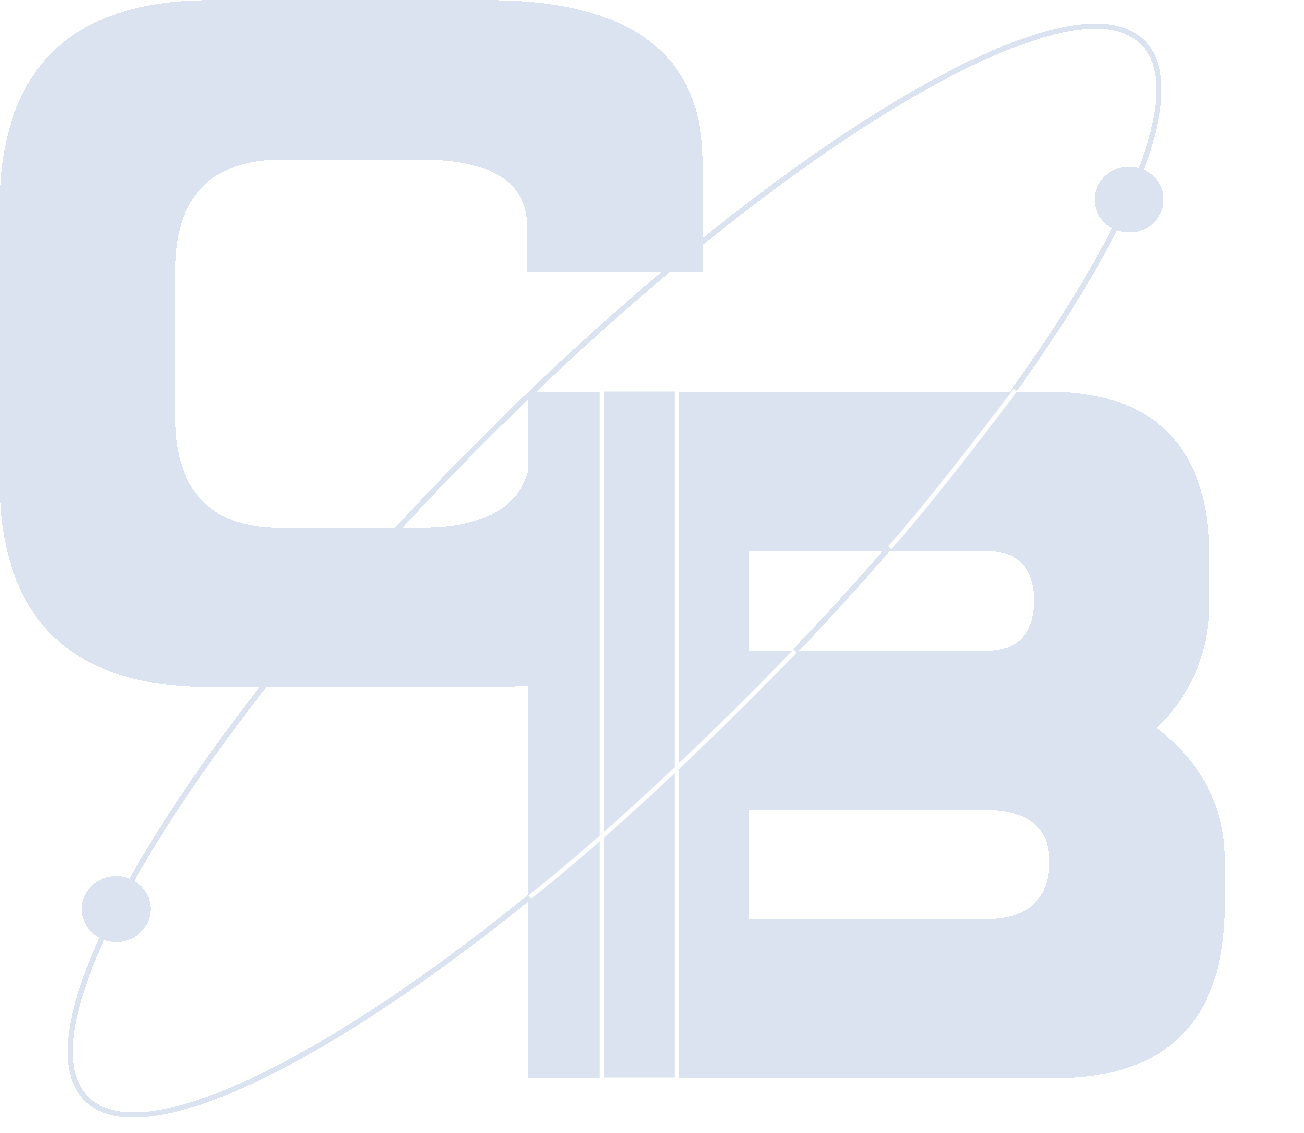 CIB Solutions Corporation logo 60% transparency